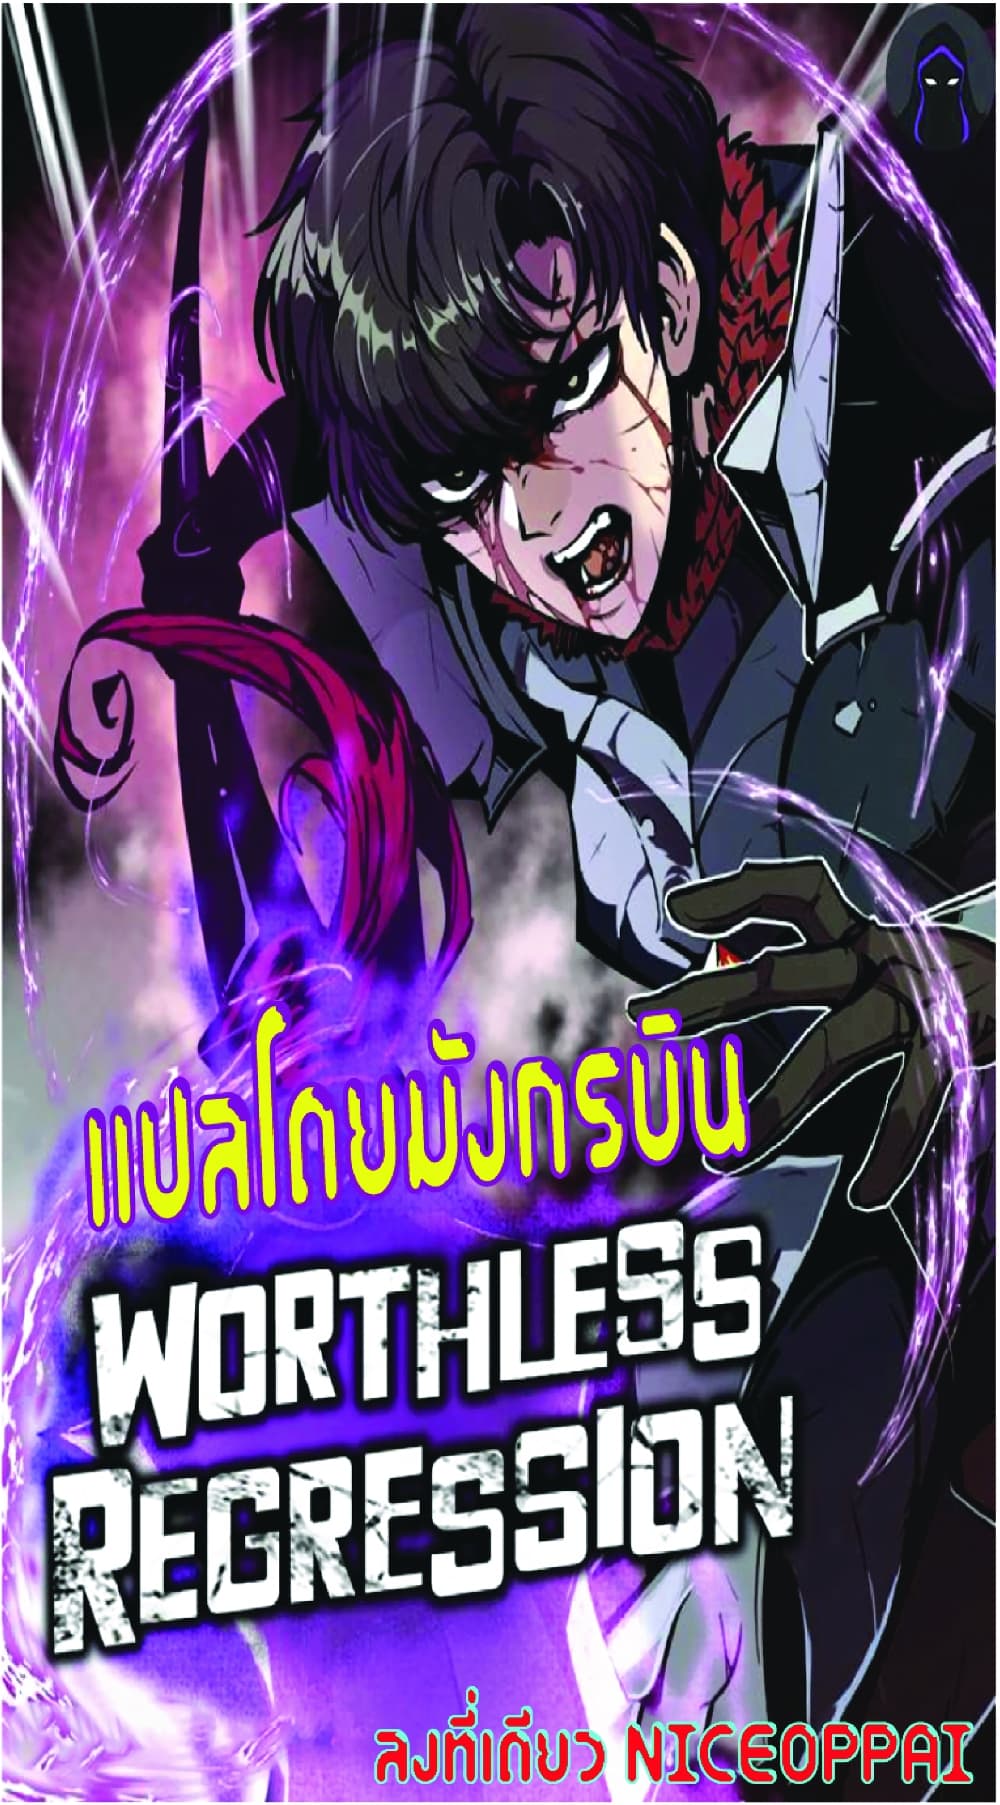 Worthless Regression20 01